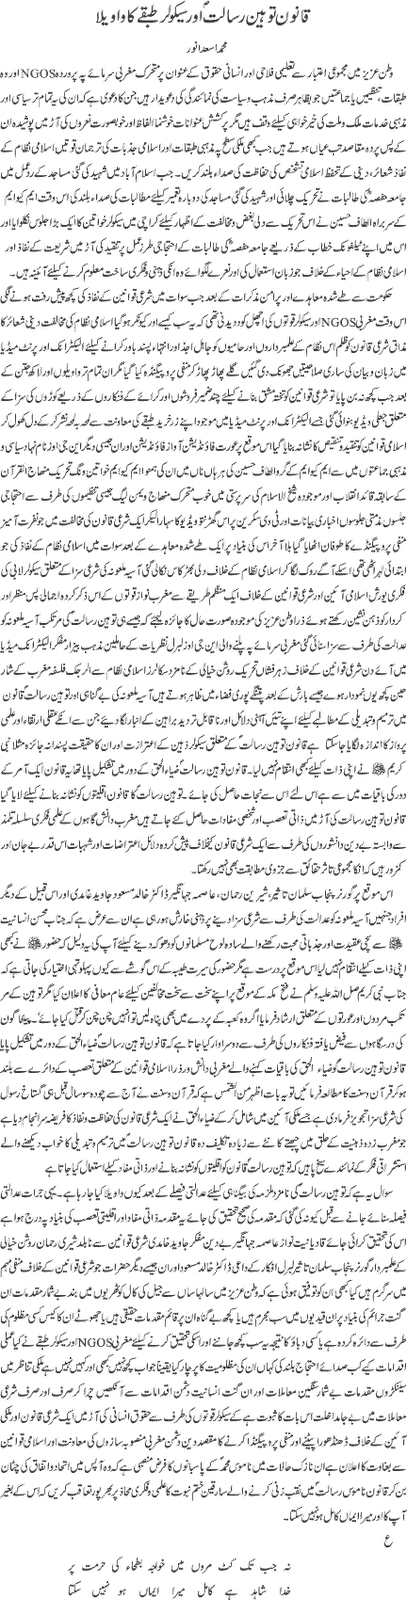 Zakir Navazish Ali Urdu Calligraphy Free Eps And Png